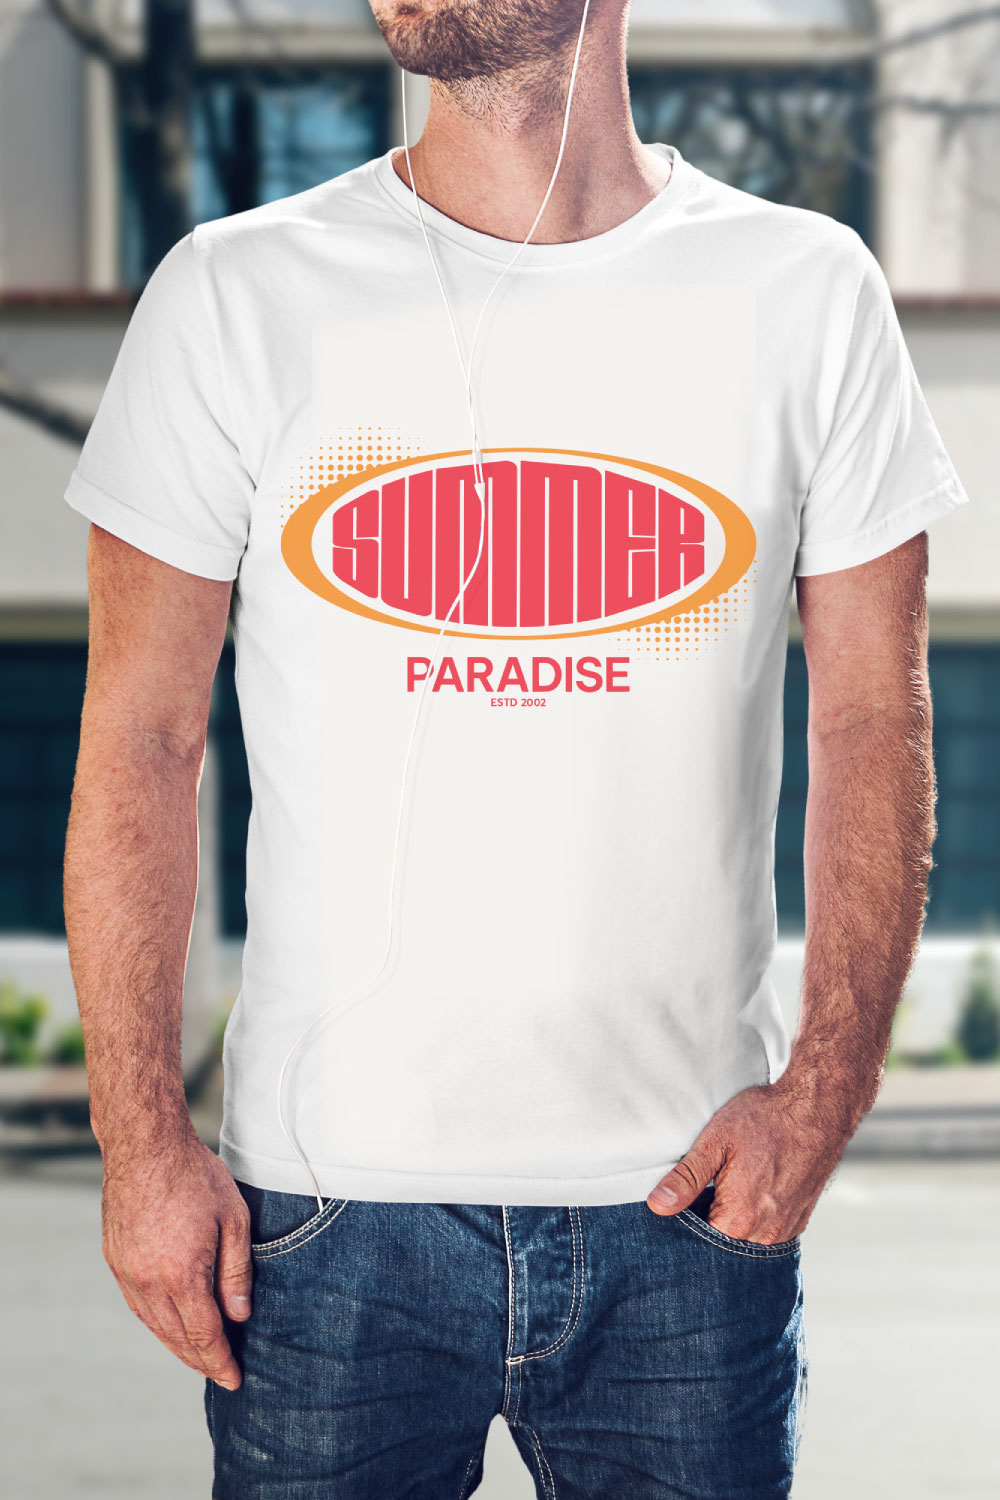 Summer Paradise T Shirt Design pinterest preview image.